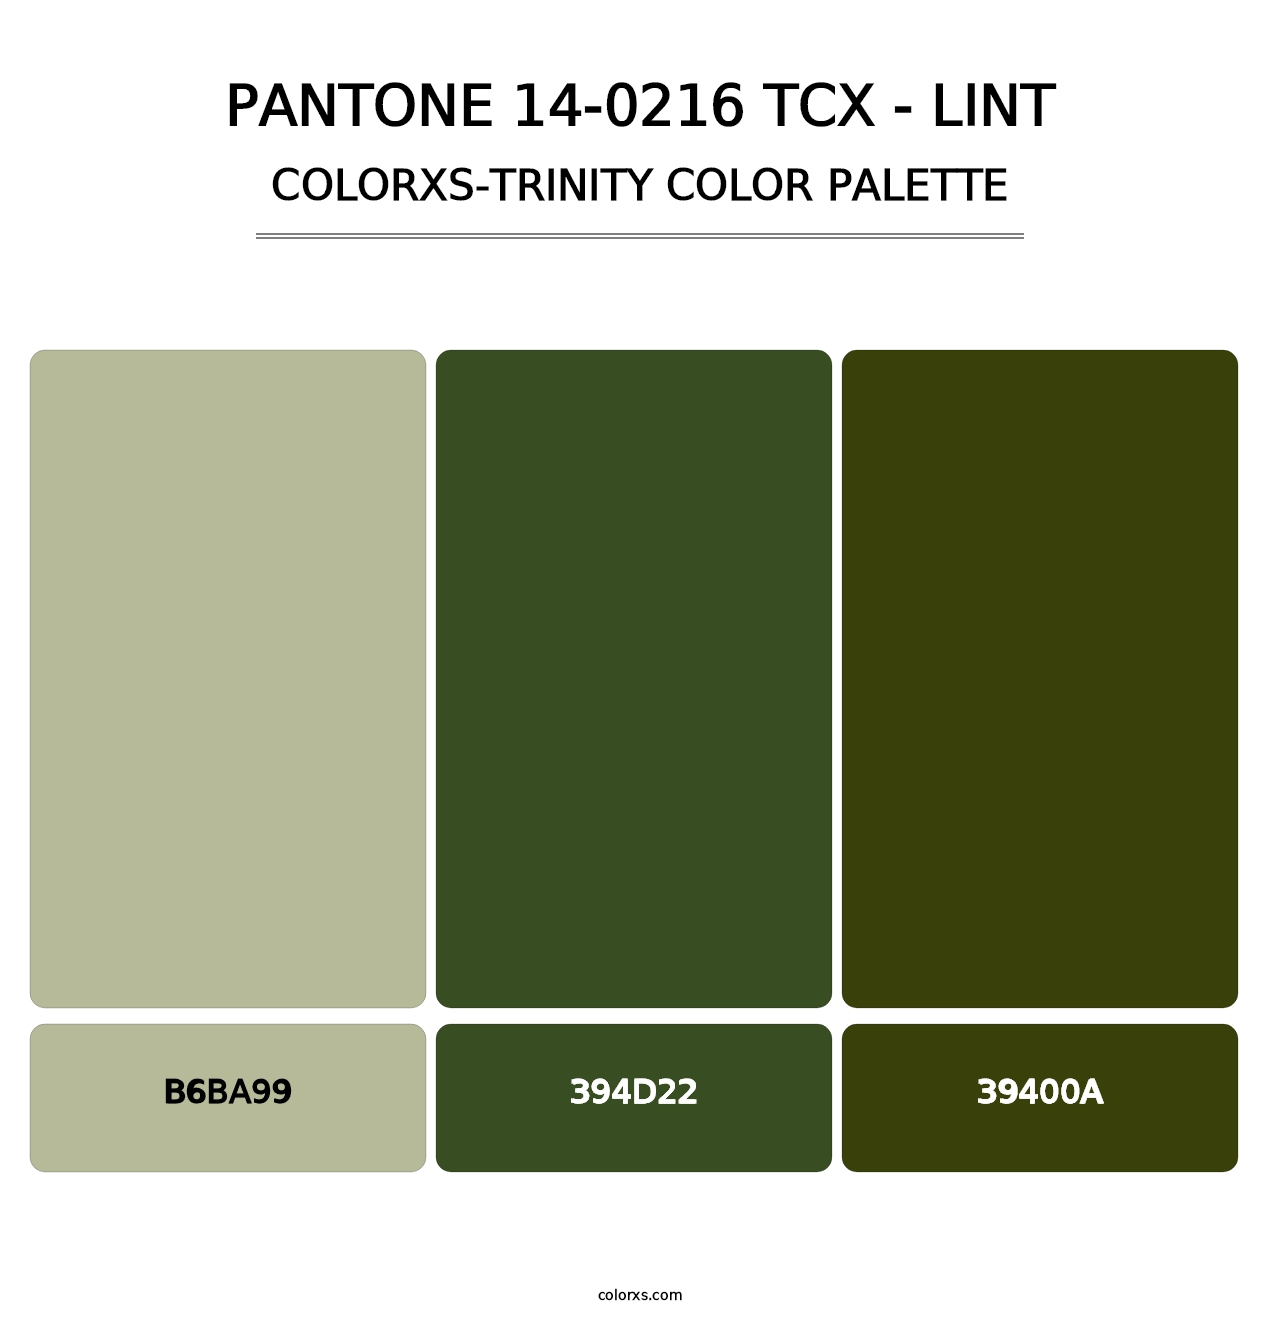 PANTONE 14-0216 TCX - Lint - Colorxs Trinity Palette